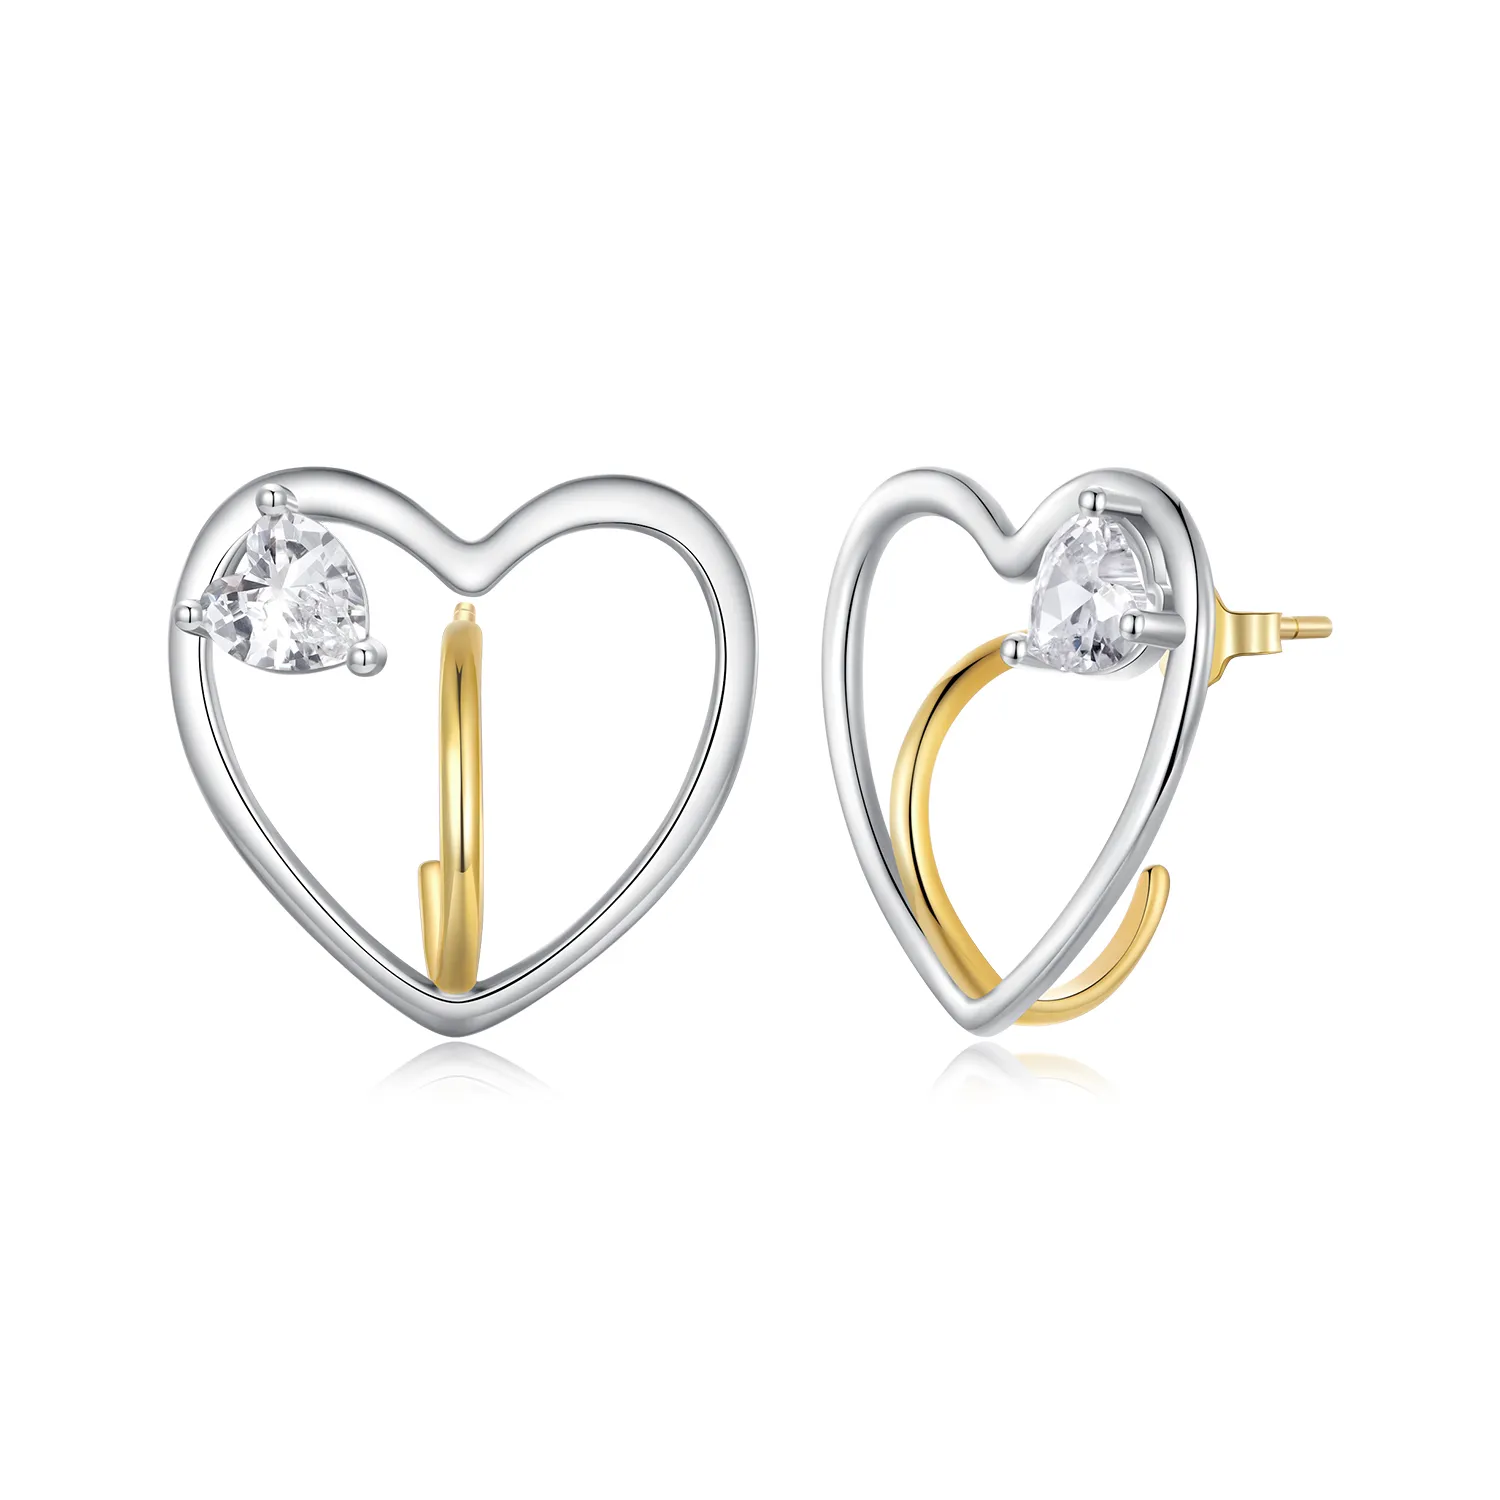 Pandora Style Love Studs Earrings - BSE888